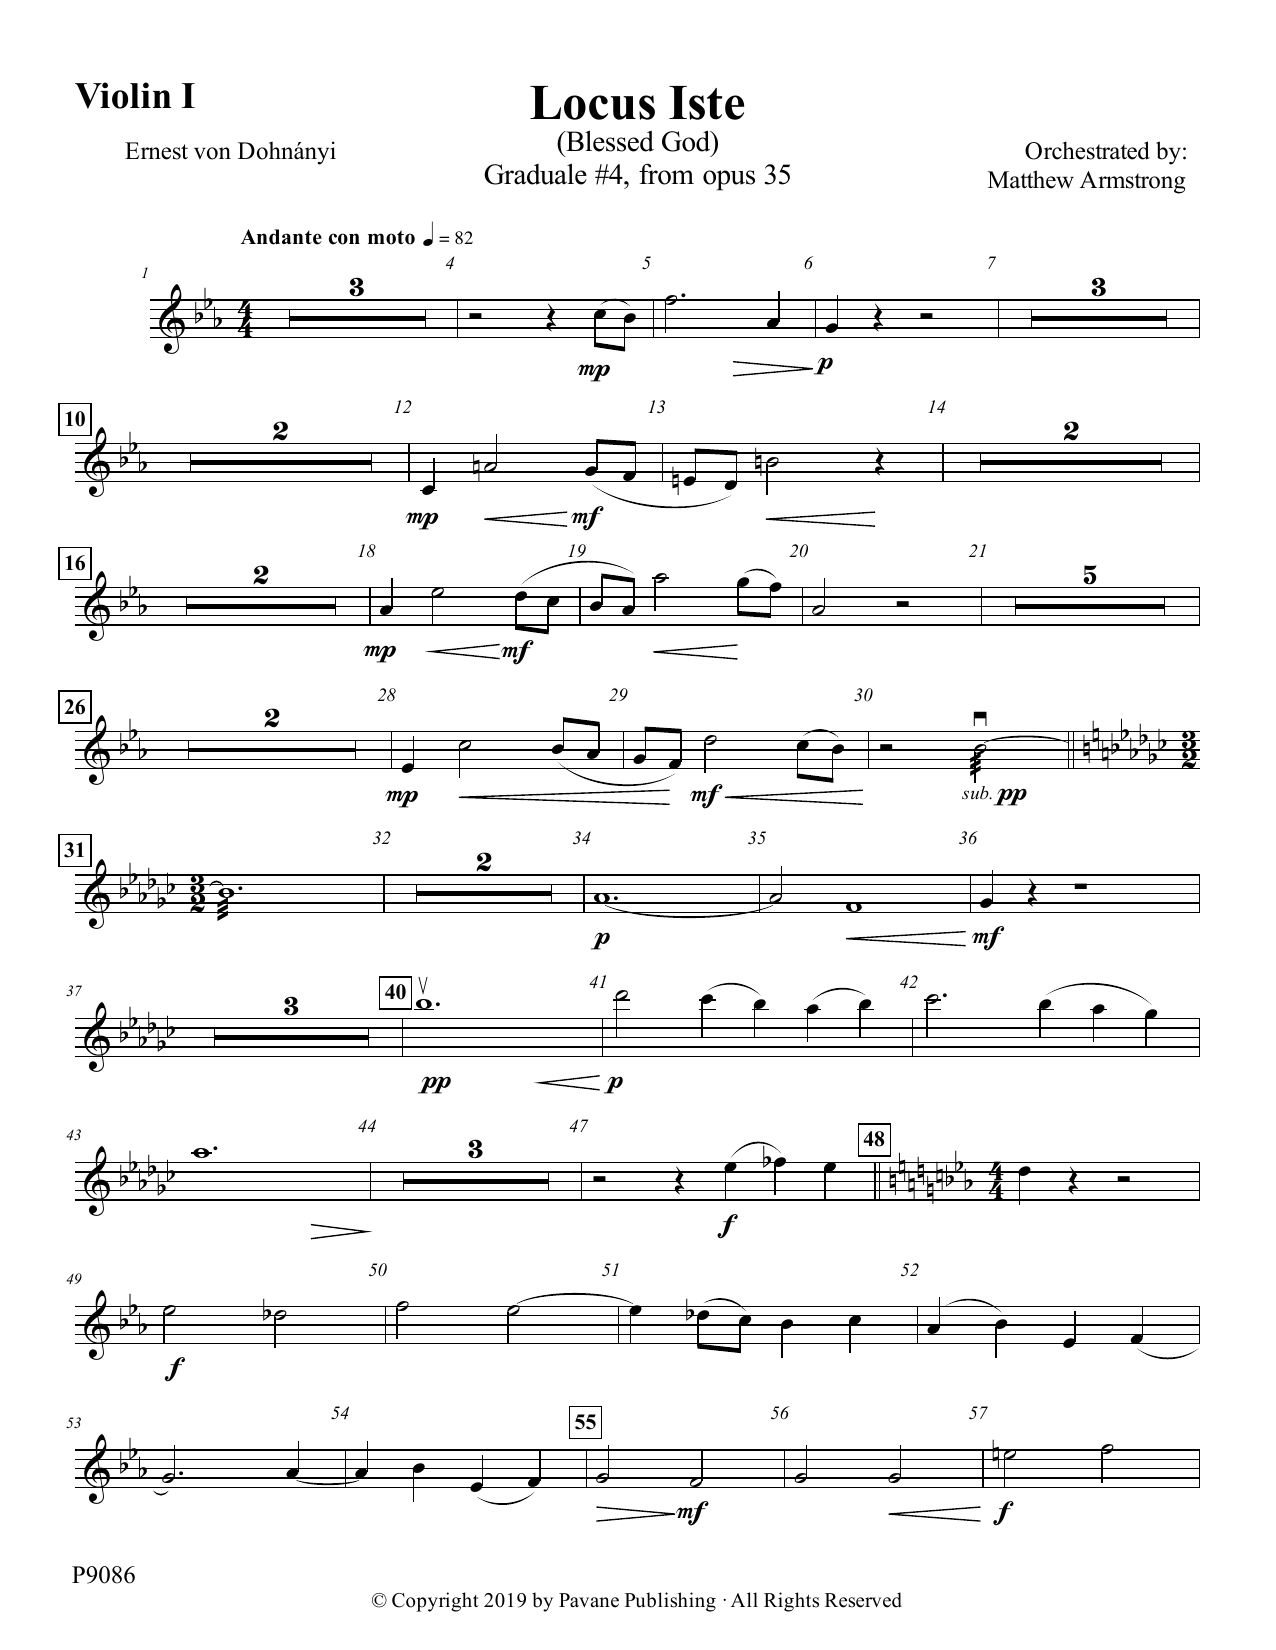 Matthew Armstrong Locus Iste - Violin I Sheet Music Notes & Chords for Choir Instrumental Pak - Download or Print PDF